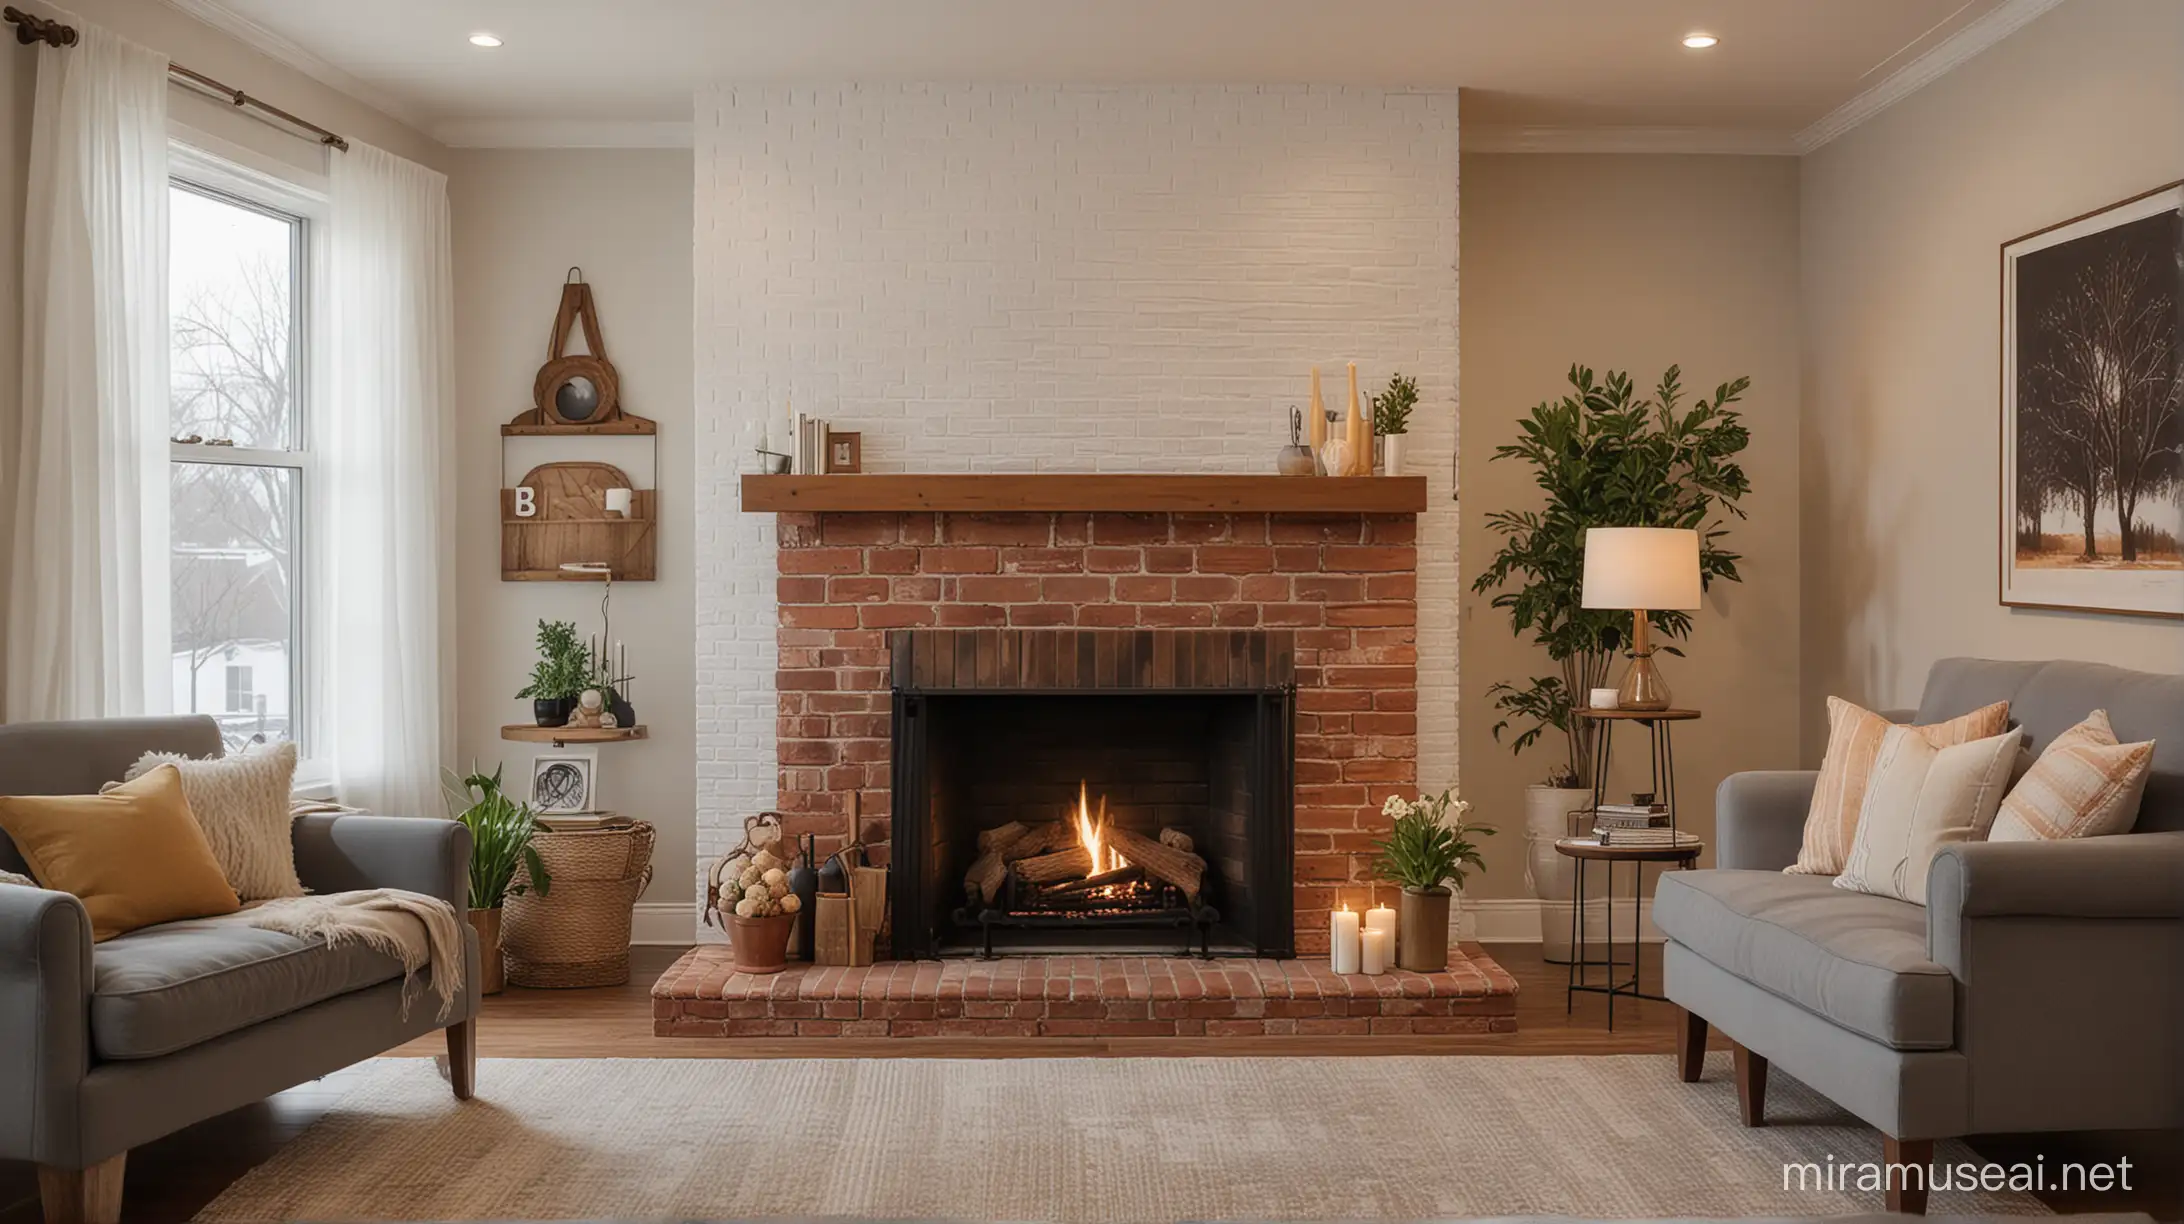 Cozy Corner Aesthetic Brick Fireplace in Living Room with Dim Lighting